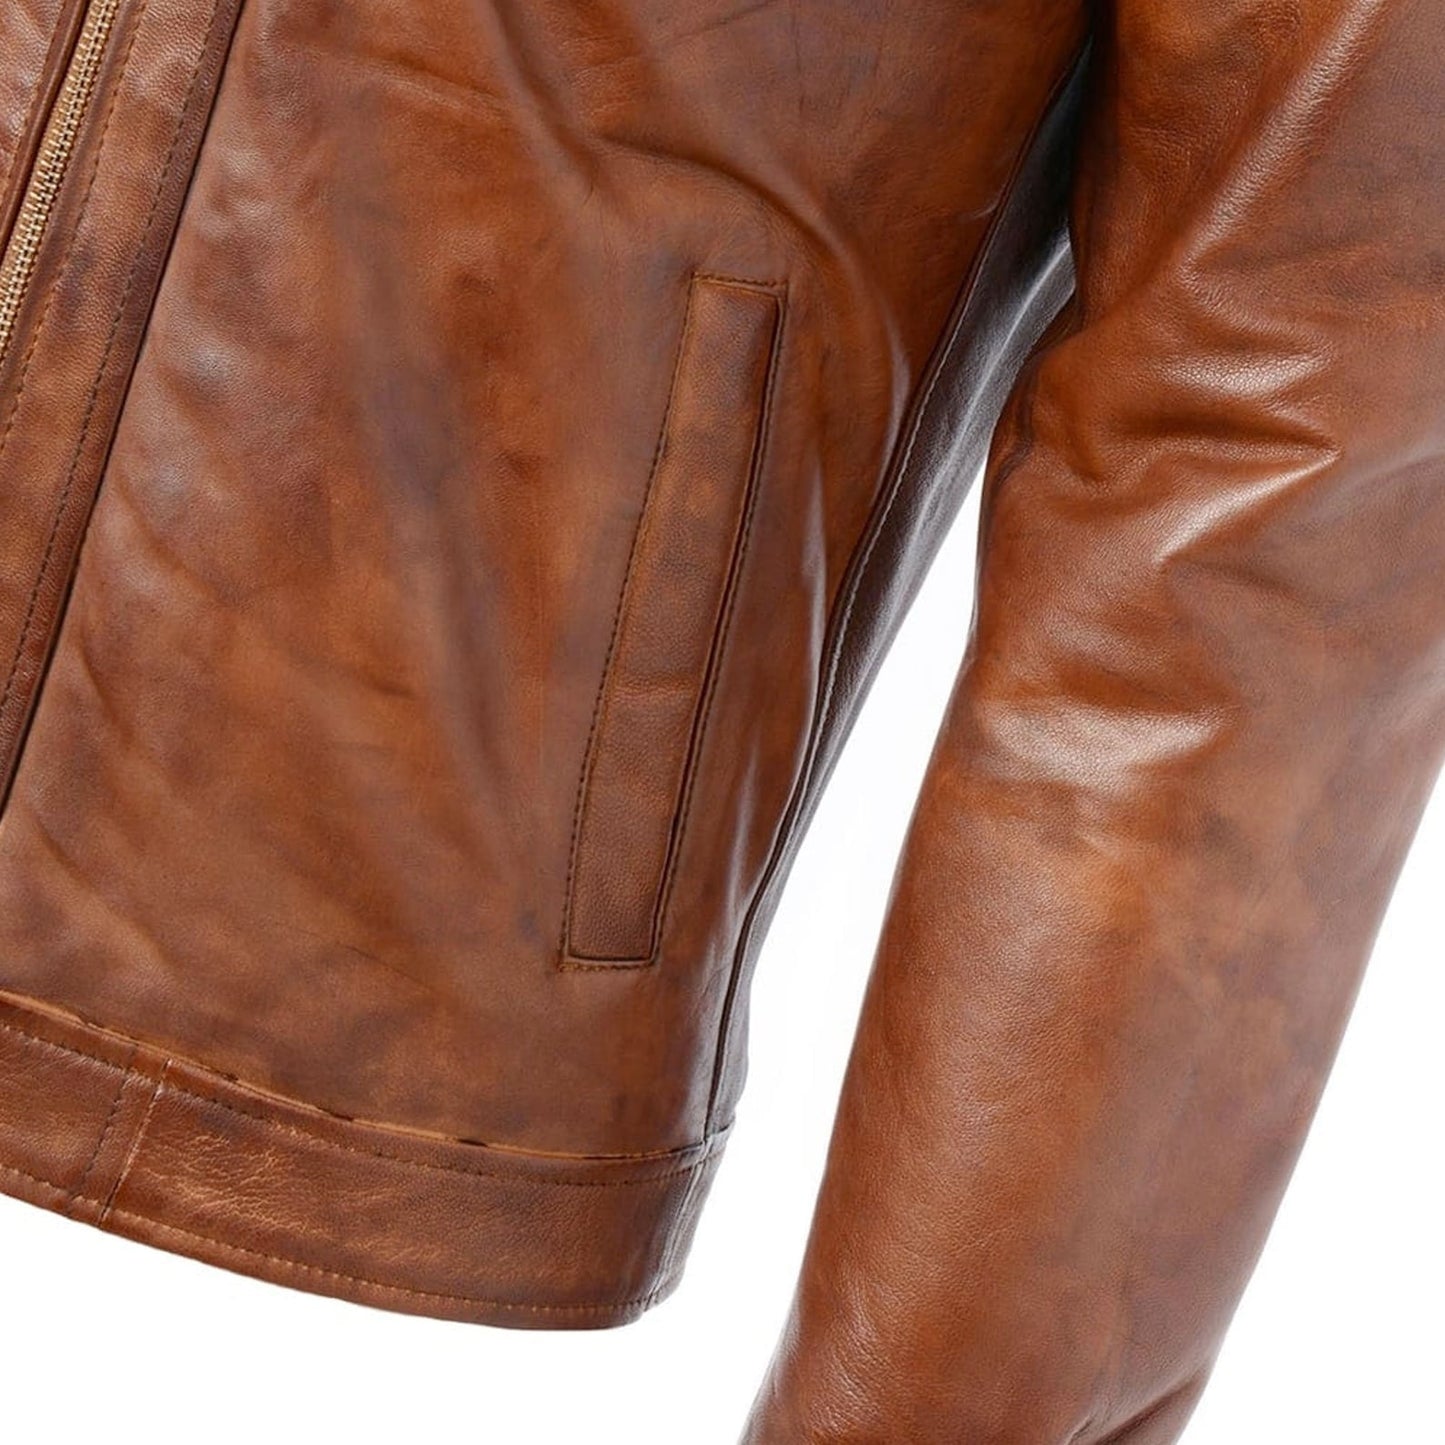 Brown Handmade Distressed Biker Leather Jacket